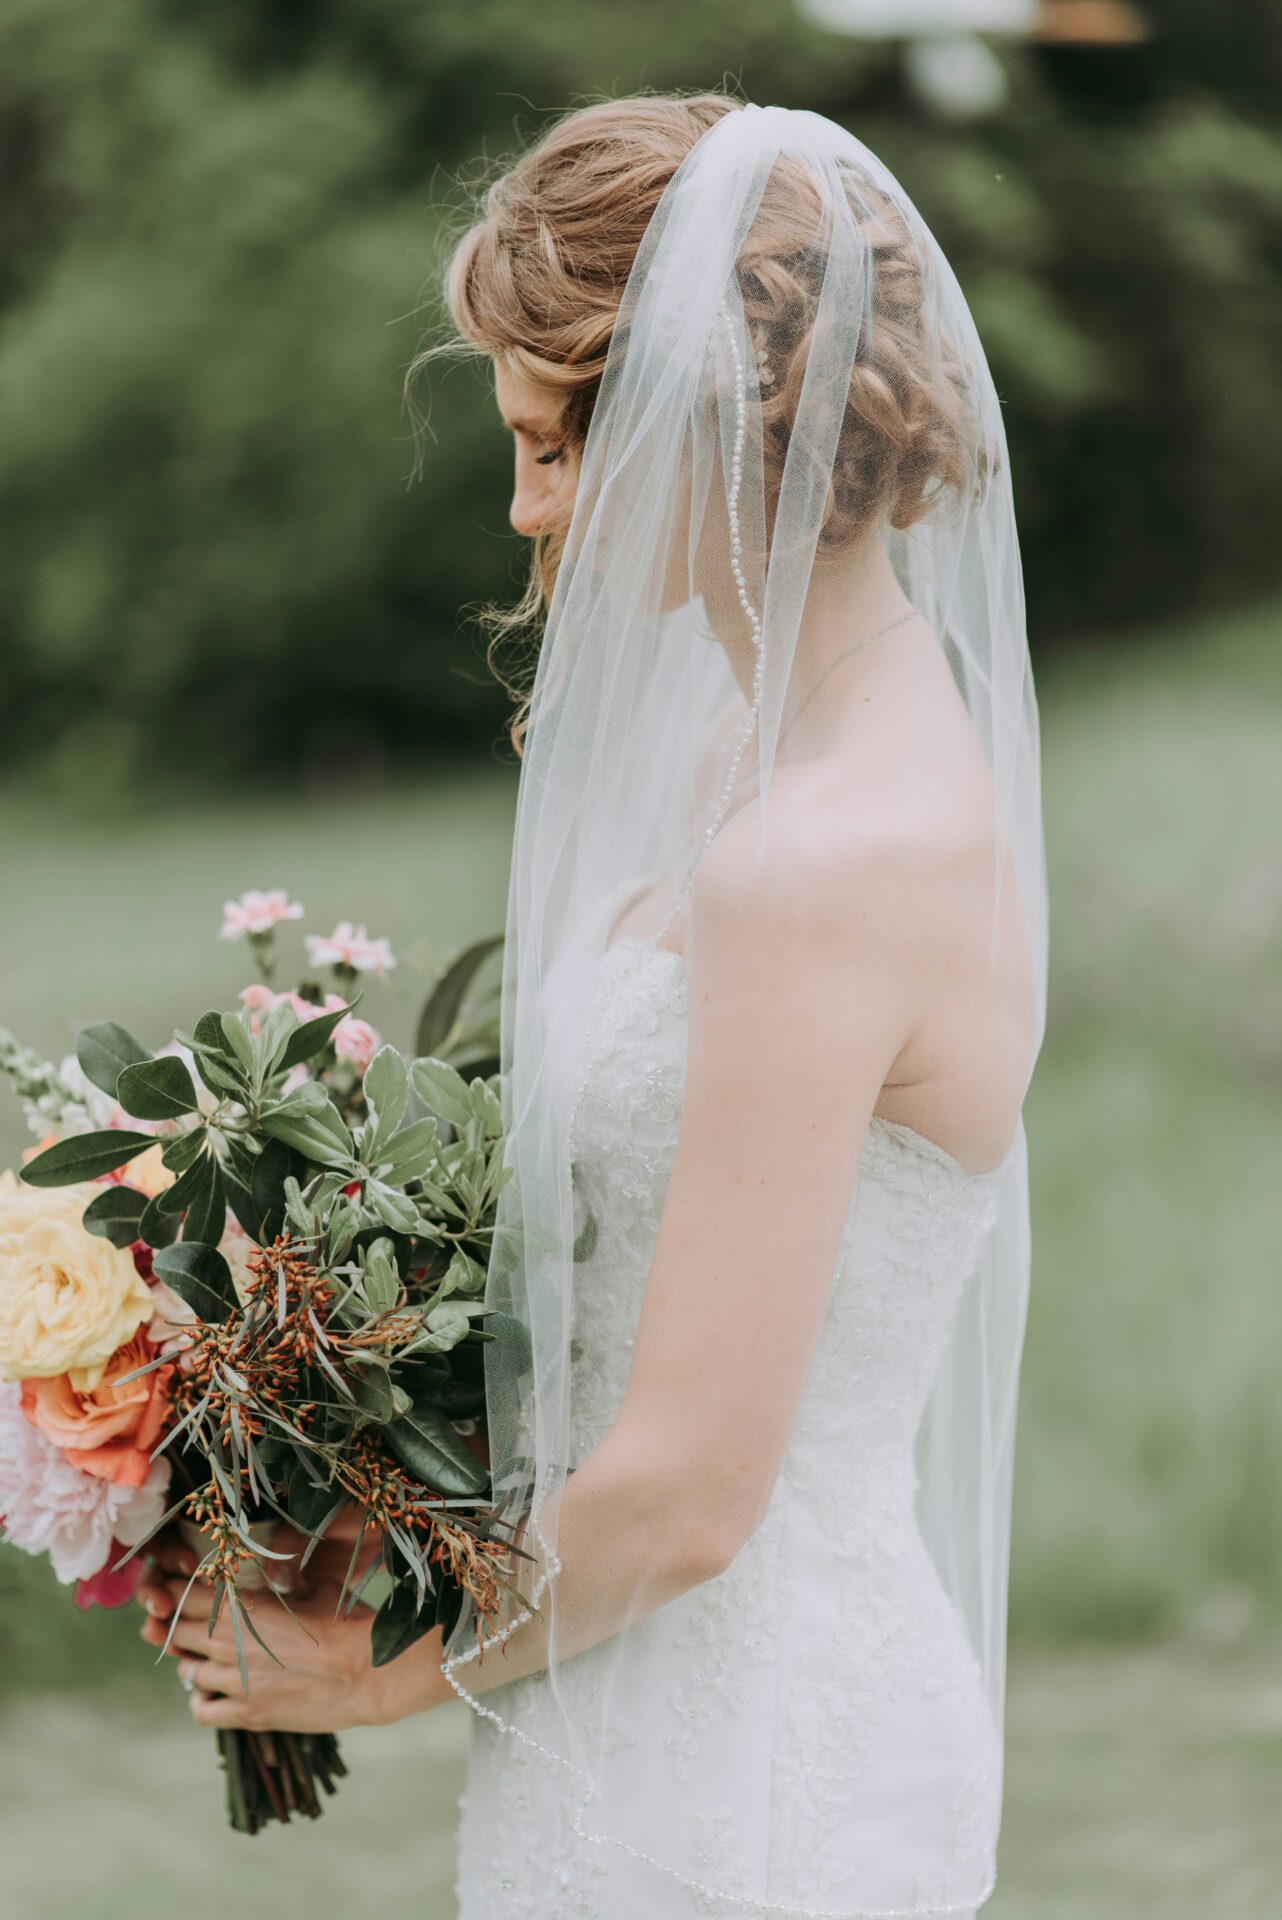 A bride holding a wildflower bouquet.